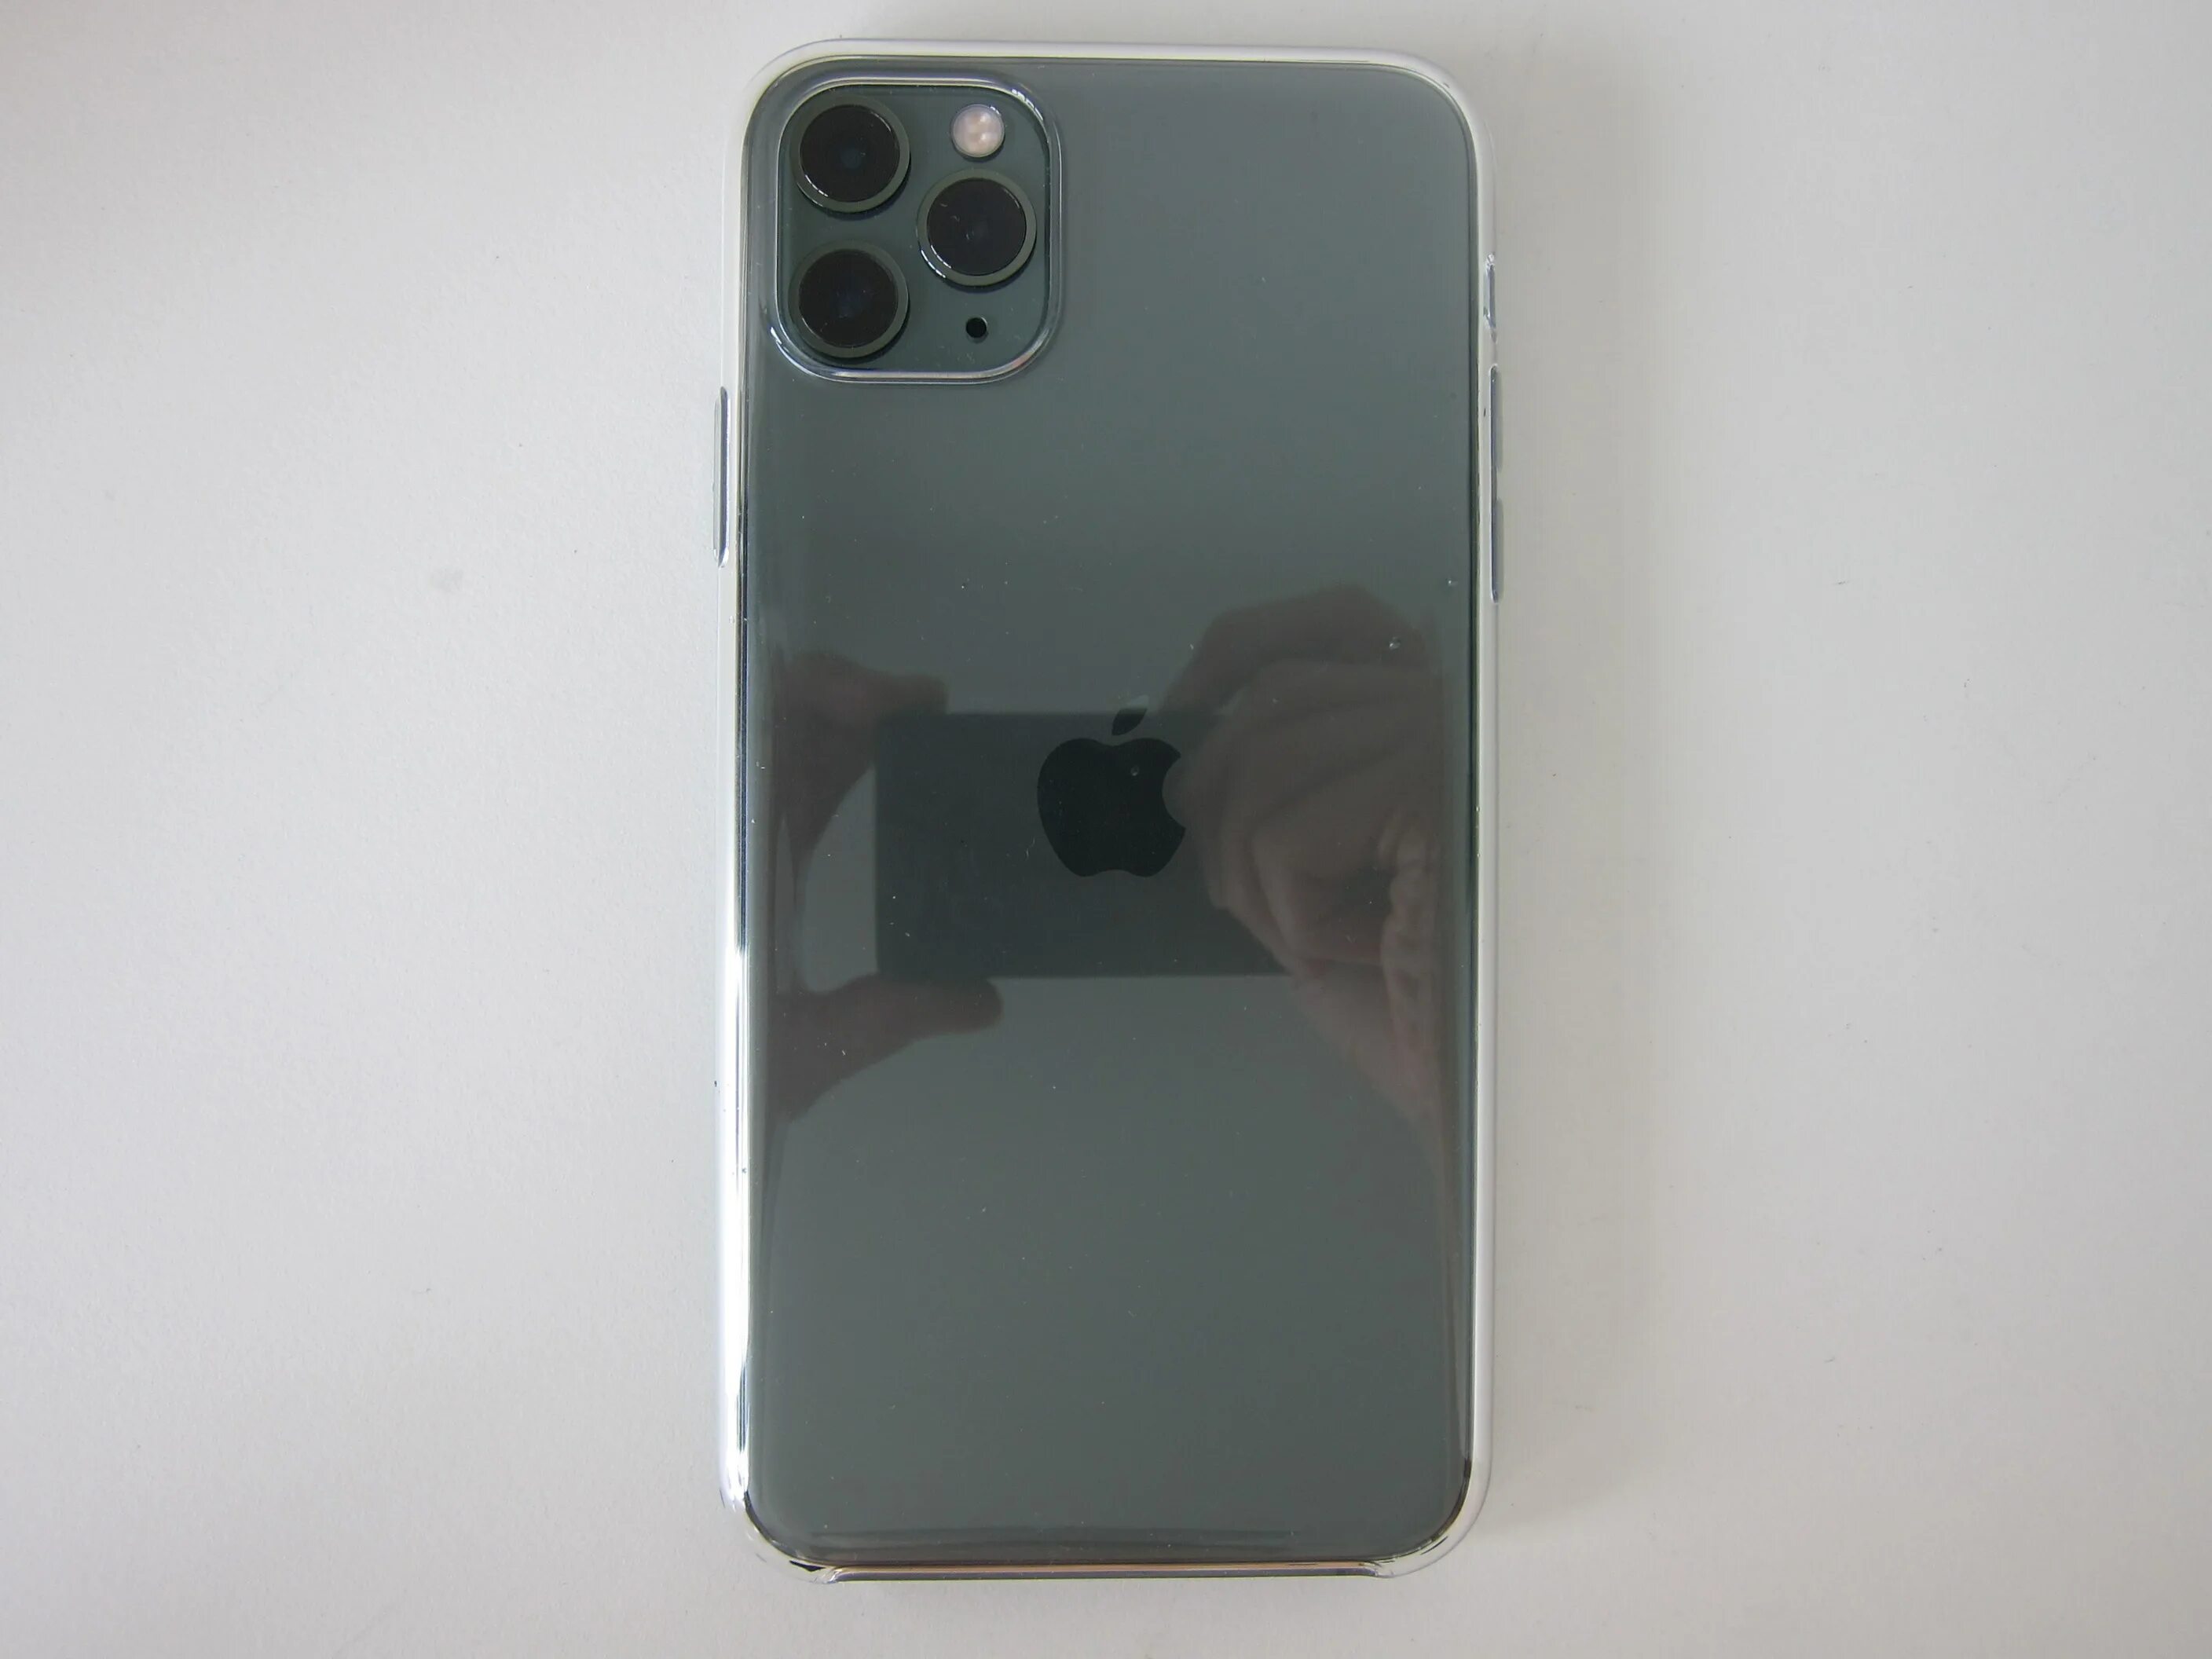 Apple case 15 pro max. Apple iphone 11 Pro Clear Case. Iphone 11 Pro Max Clear Case. Iphone 11 Pro Max Apple Clear Case. Iphone 11 Pro Max back.